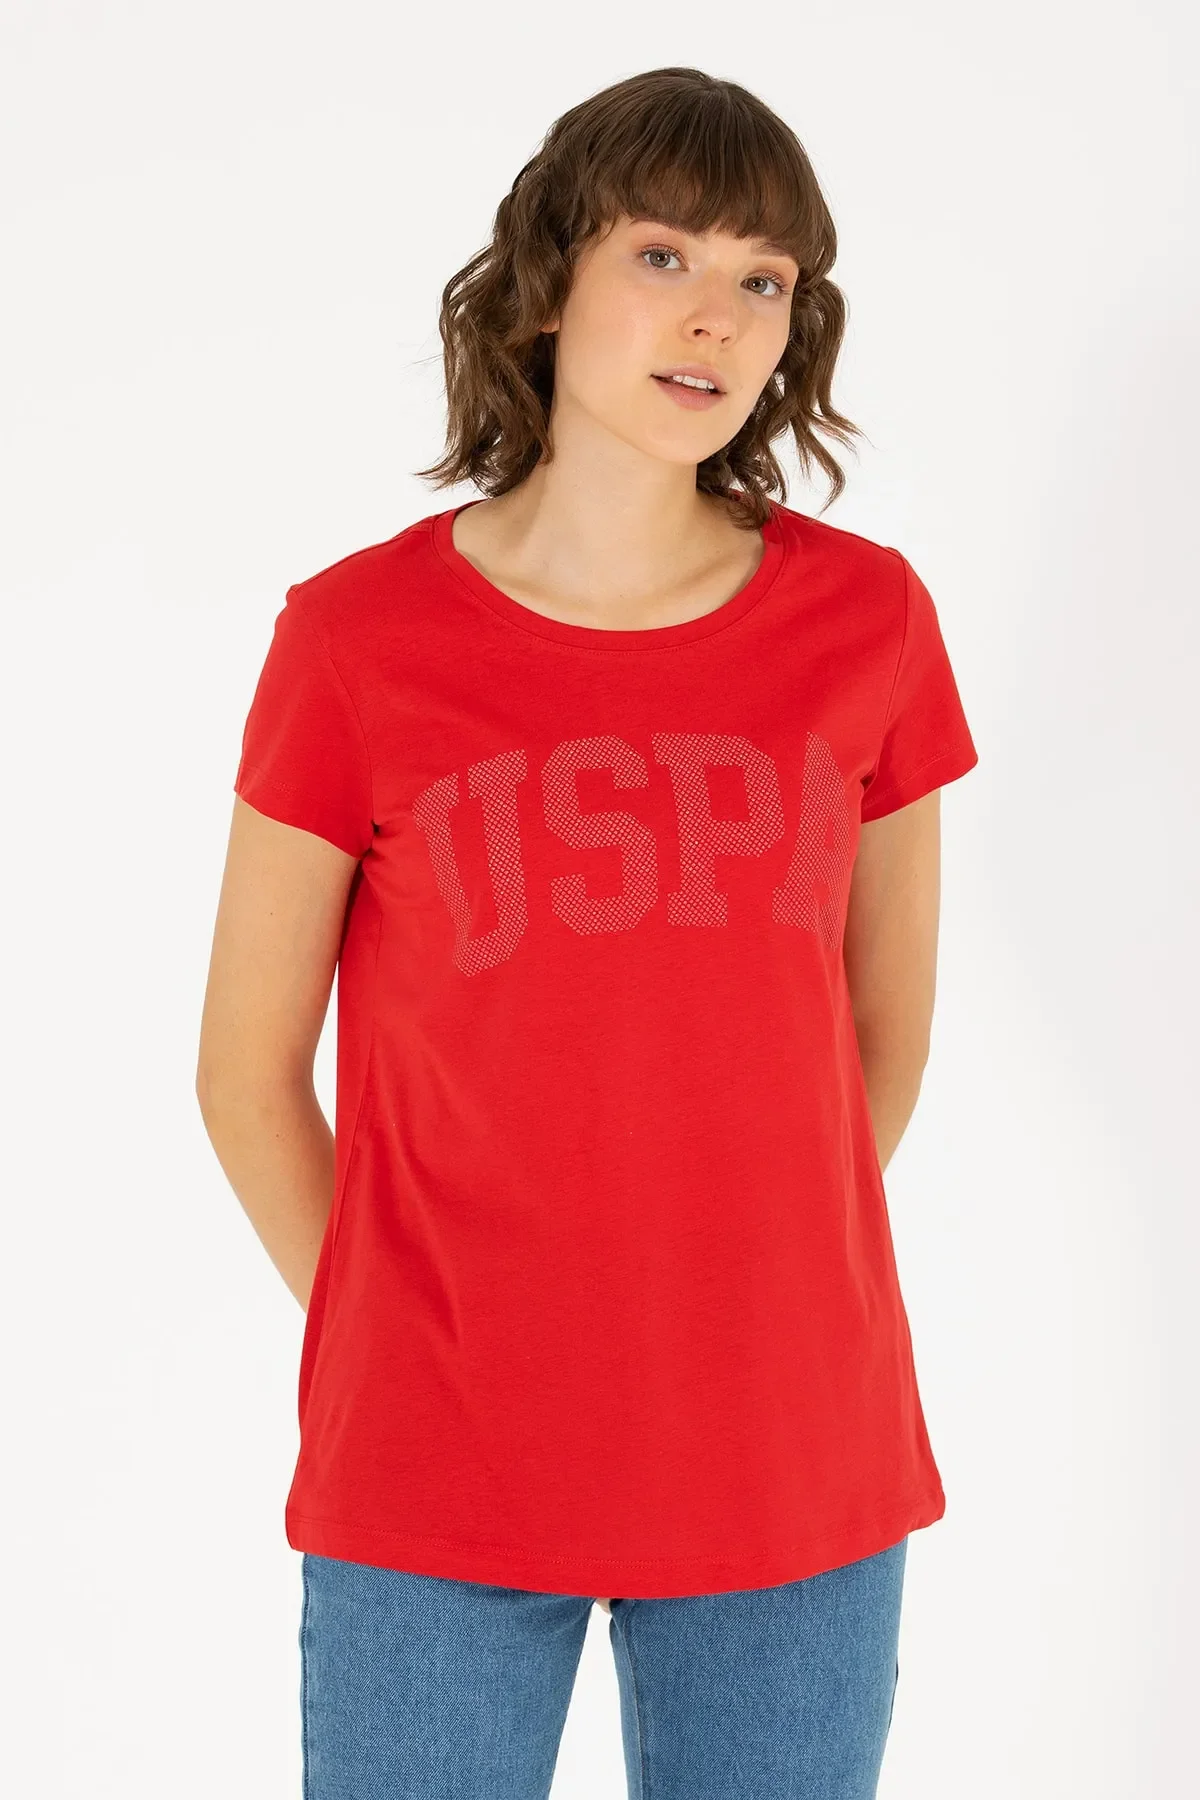 Kadın T-shirt-Kırmızı - 1